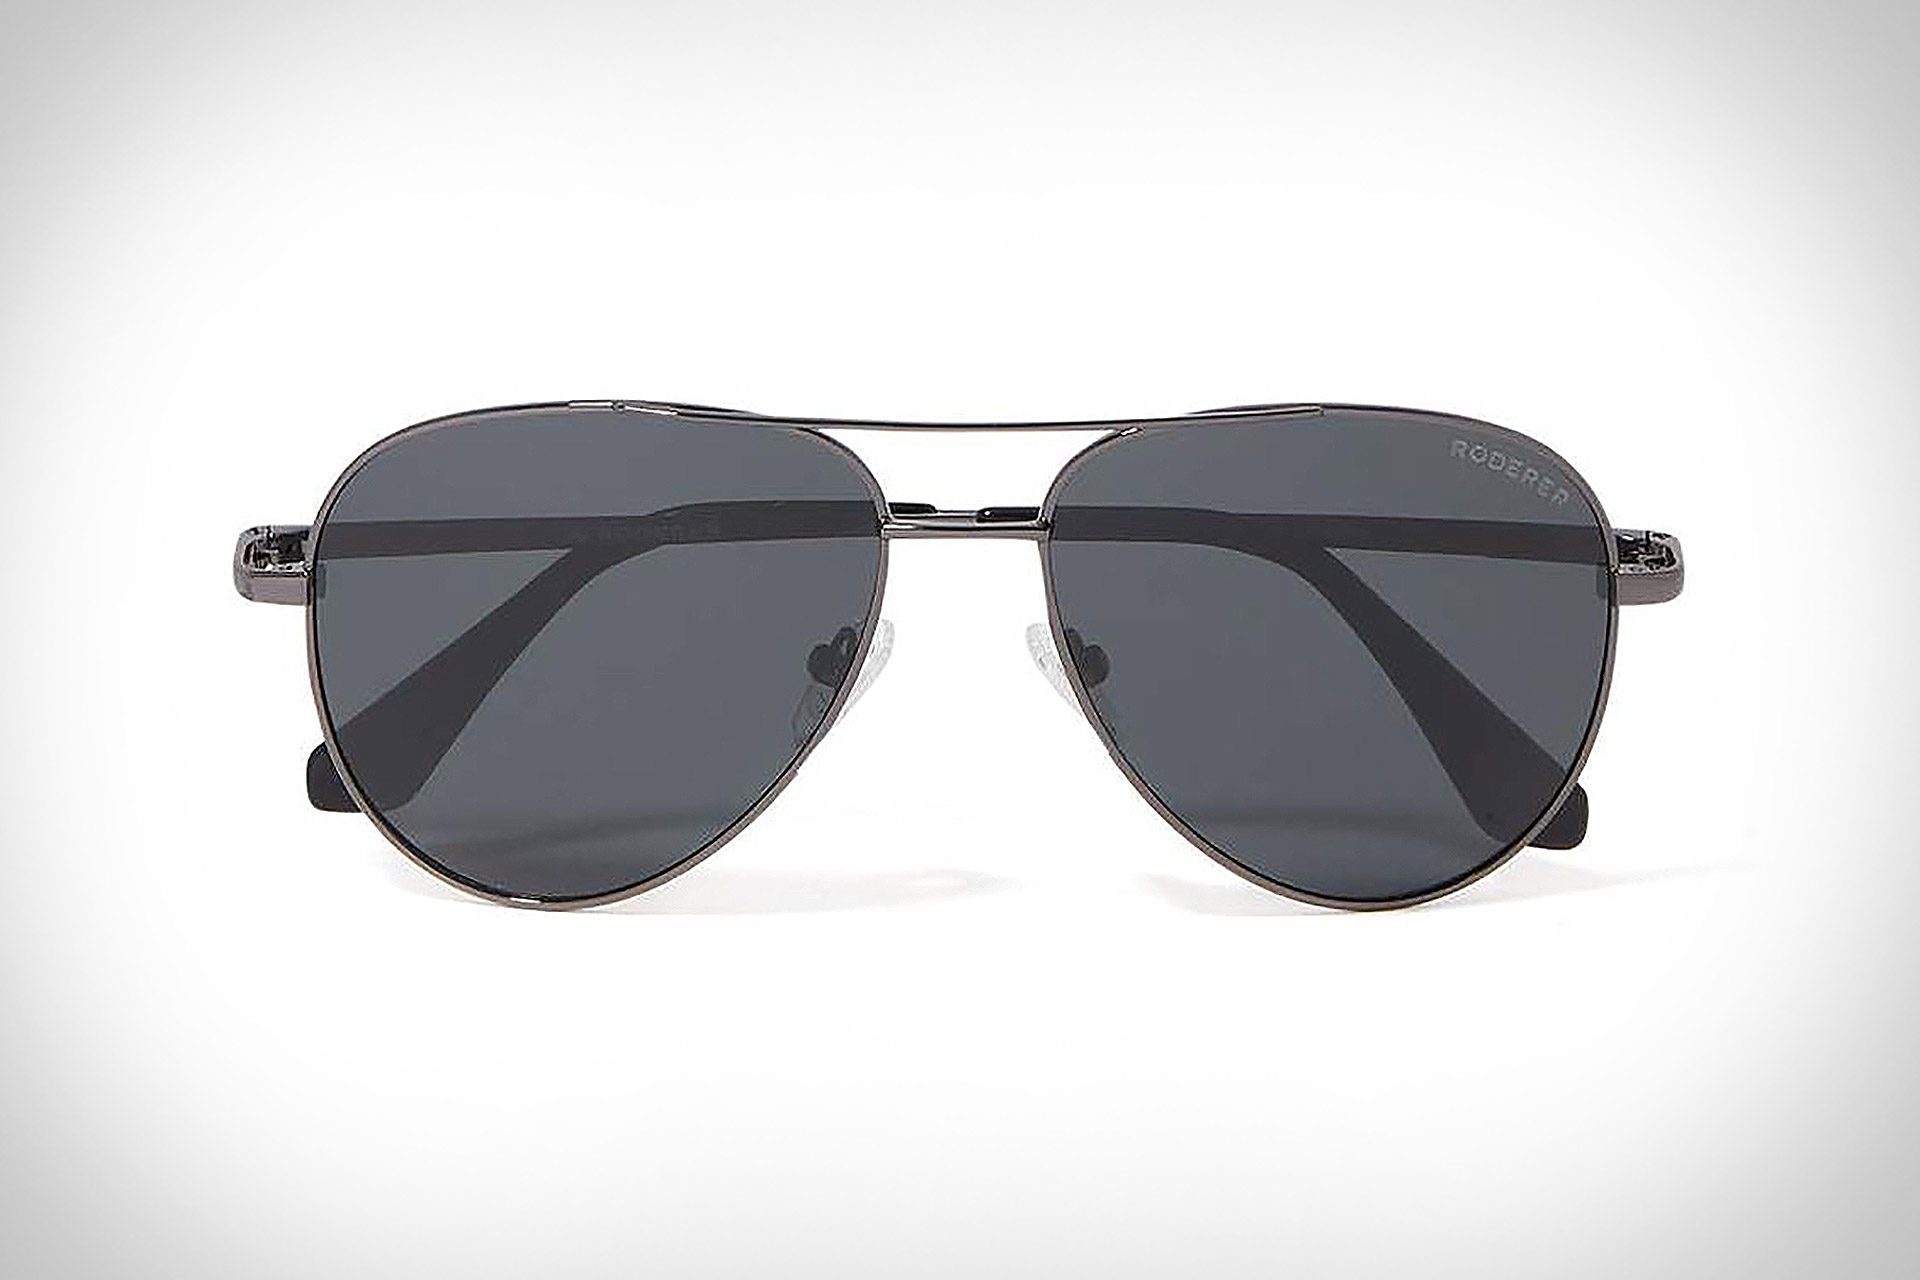 Roderer James Aviator Sunglasses | Uncrate, #Roderer #James #Aviator #Sunglasses #Uncrate